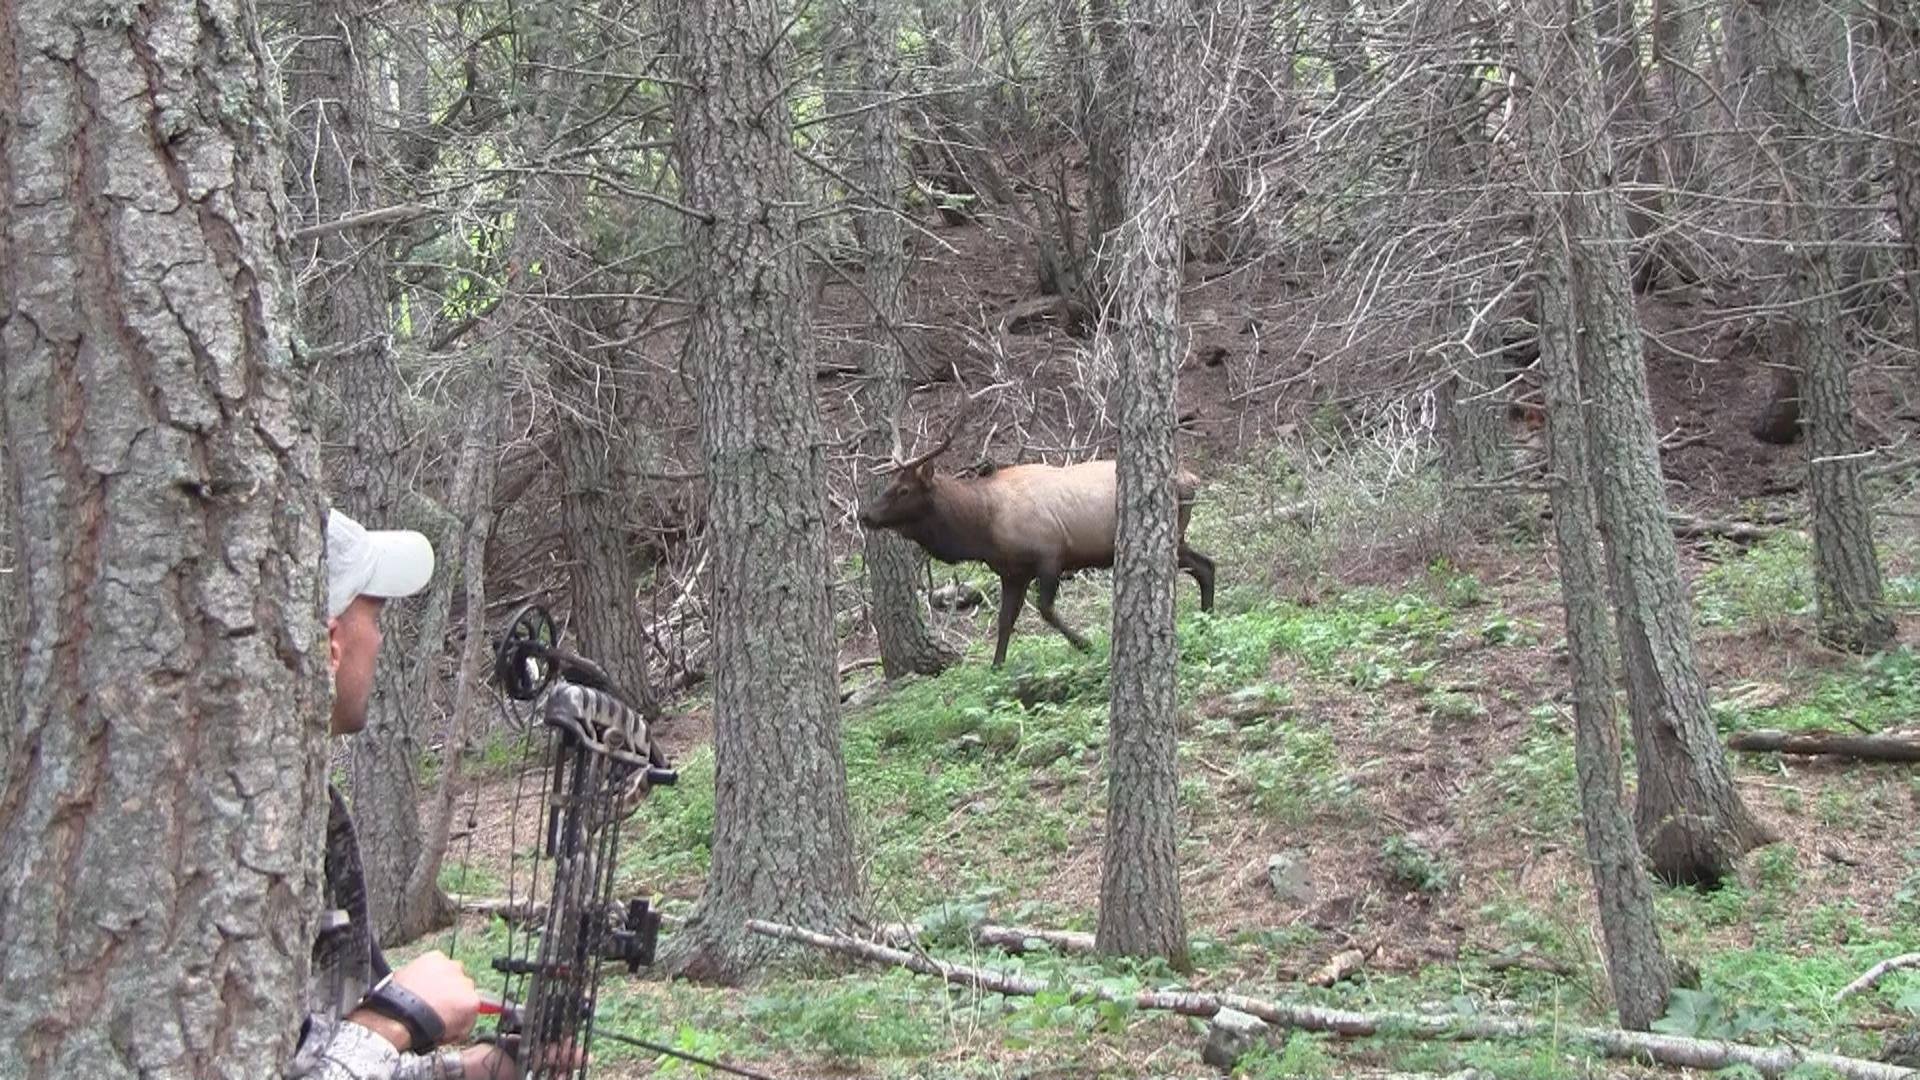 Best ideas about DIY Colorado Elk Hunt
. Save or Pin Tips for DIY Elk Hunting Success Hunter Ed Blog Now.